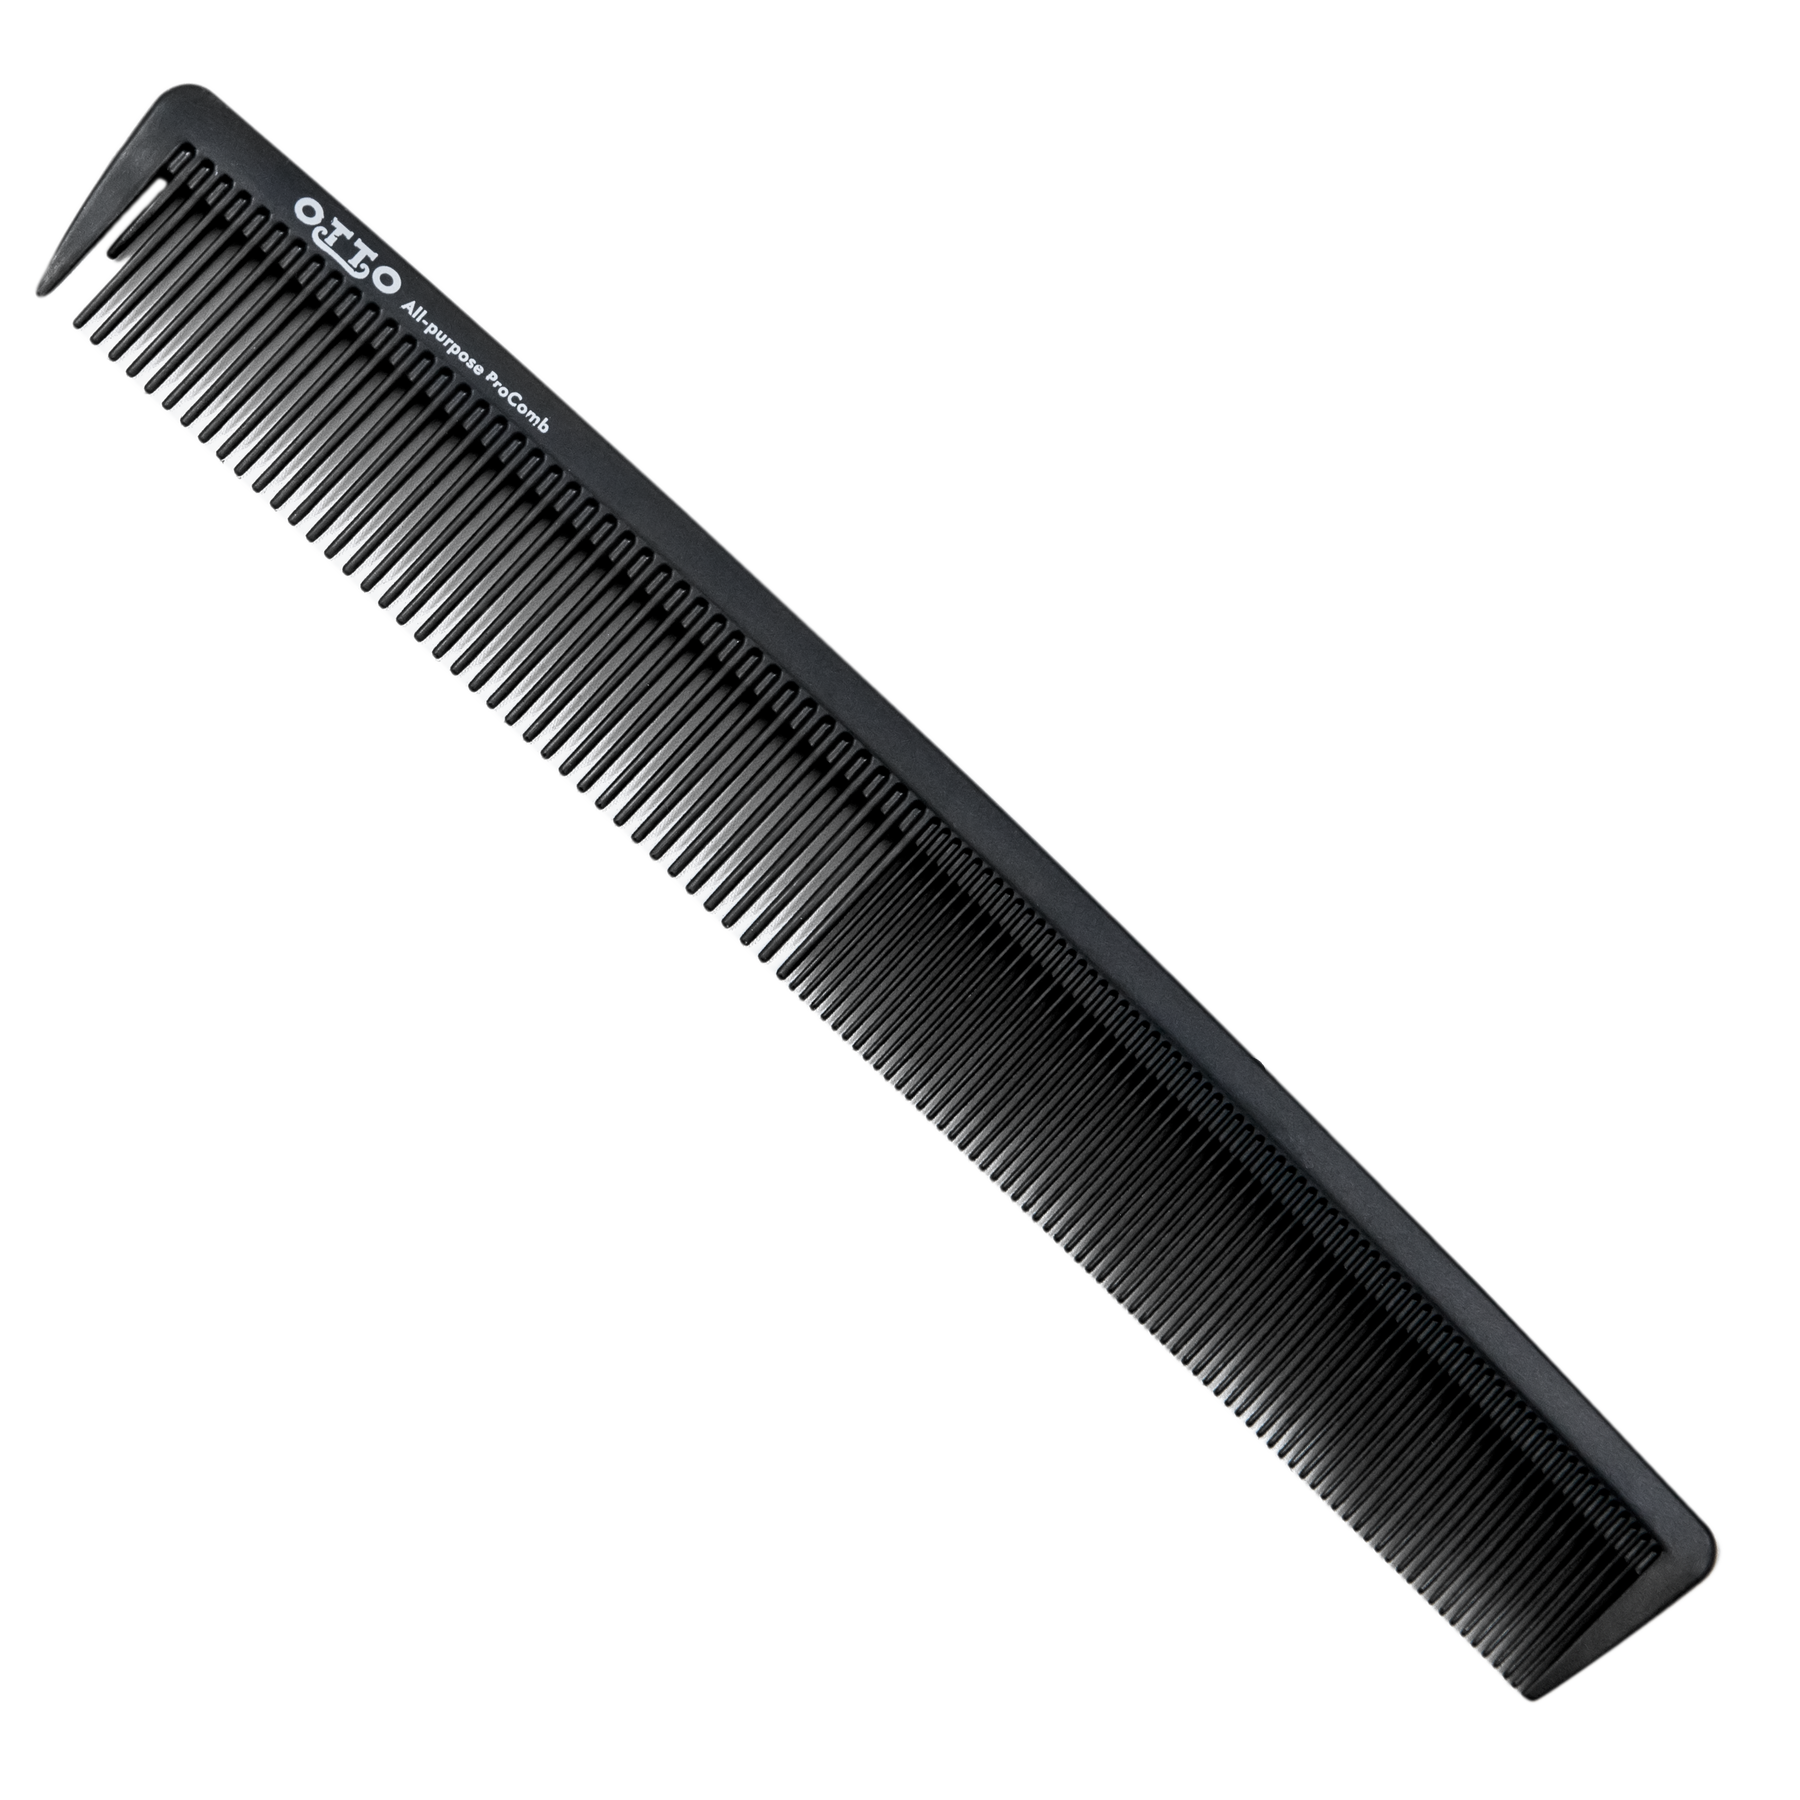 Otto 8.5" All-Purpose Pro Comb (carbon Fiber Anti Static Heat Resistant) - by Otto |ProCare Outlet|